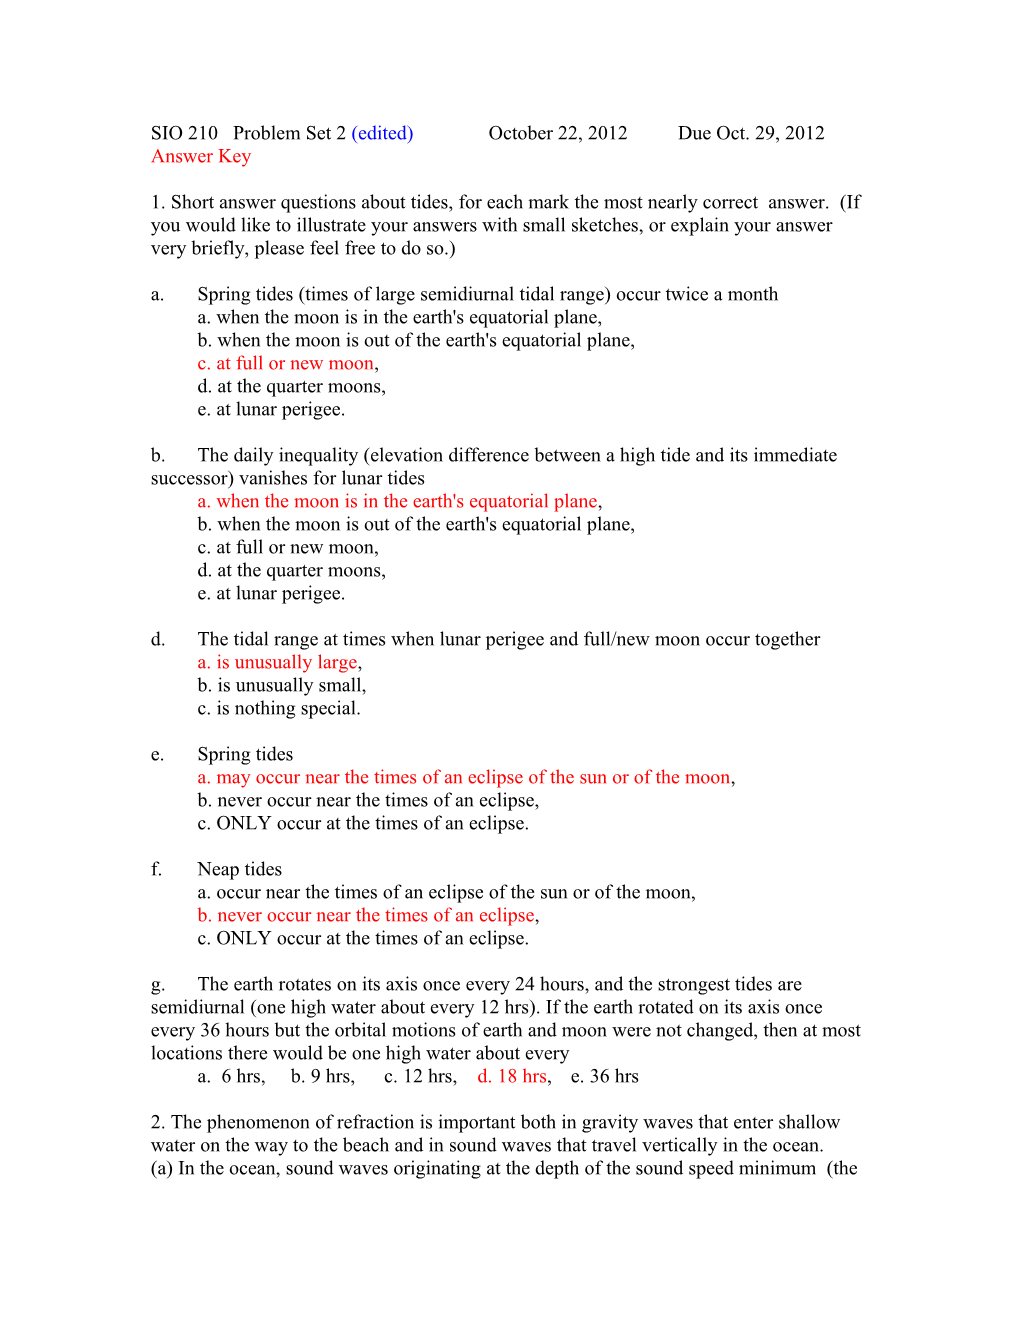 SIO 210 Problem Set 2 (Edited) October 22, 2012 Due Oct. 29, 2012